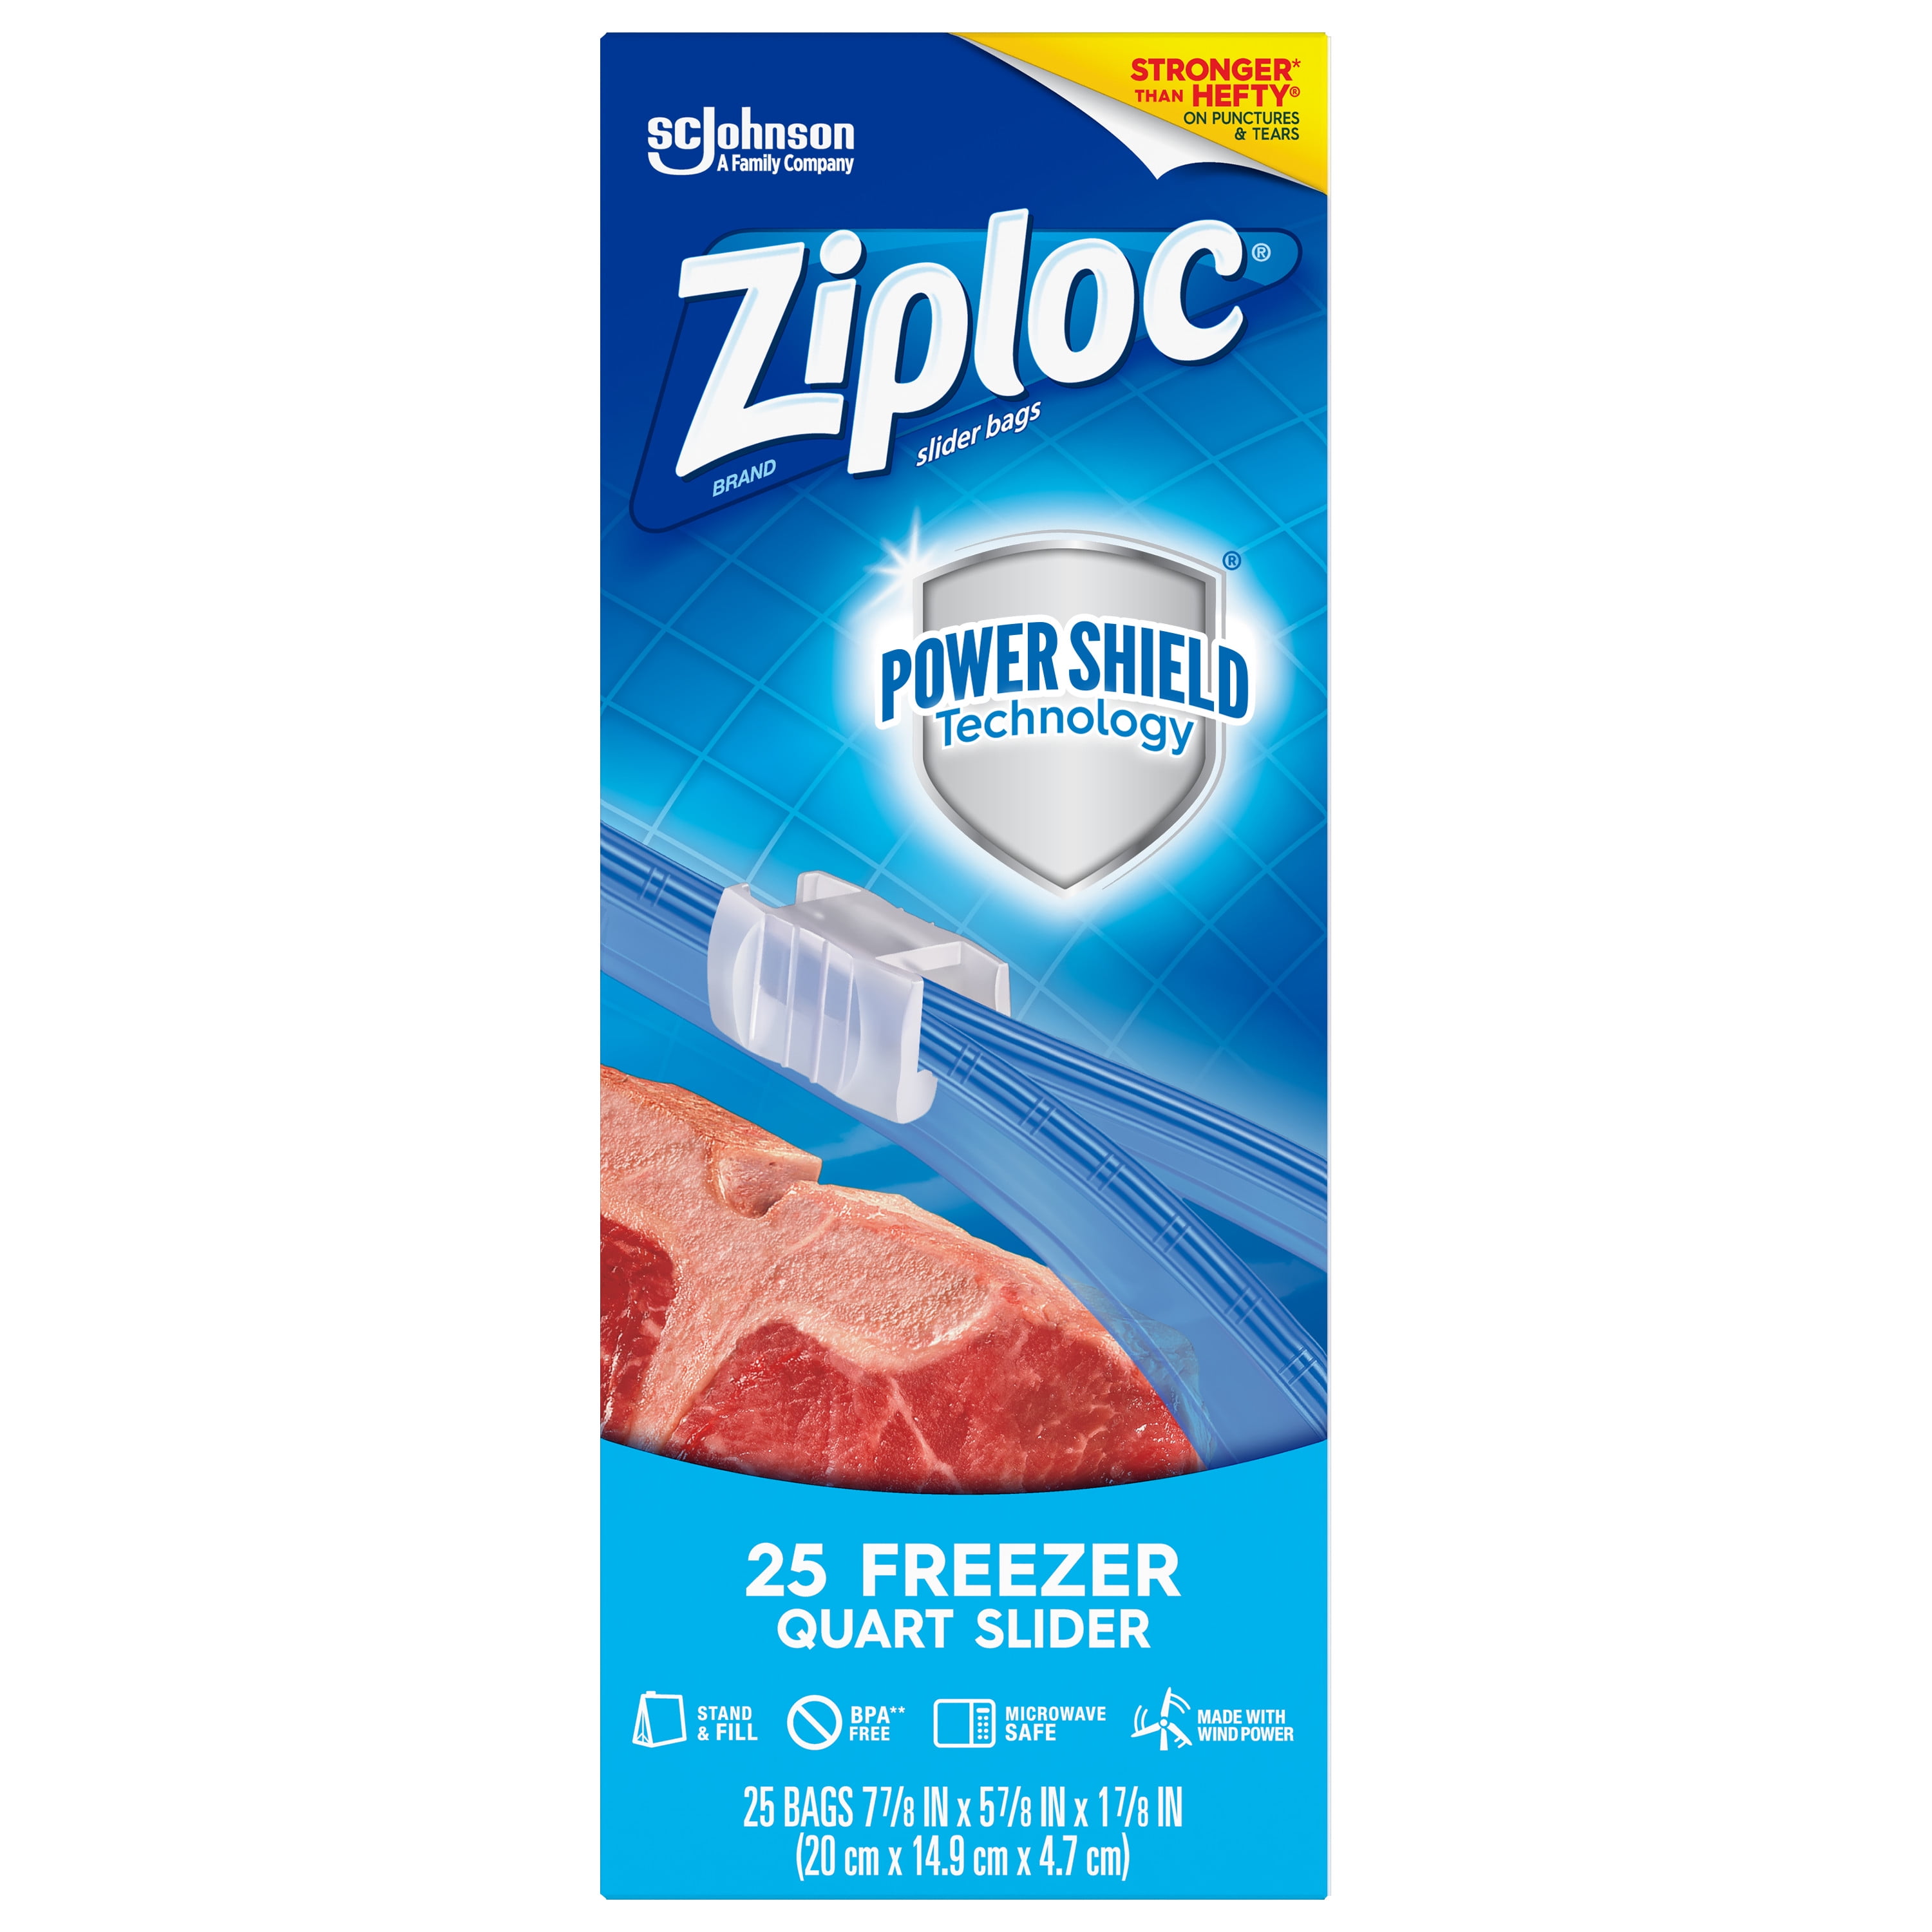 Ziploc Slider Freezer Bags, Qt., 15-Ct.